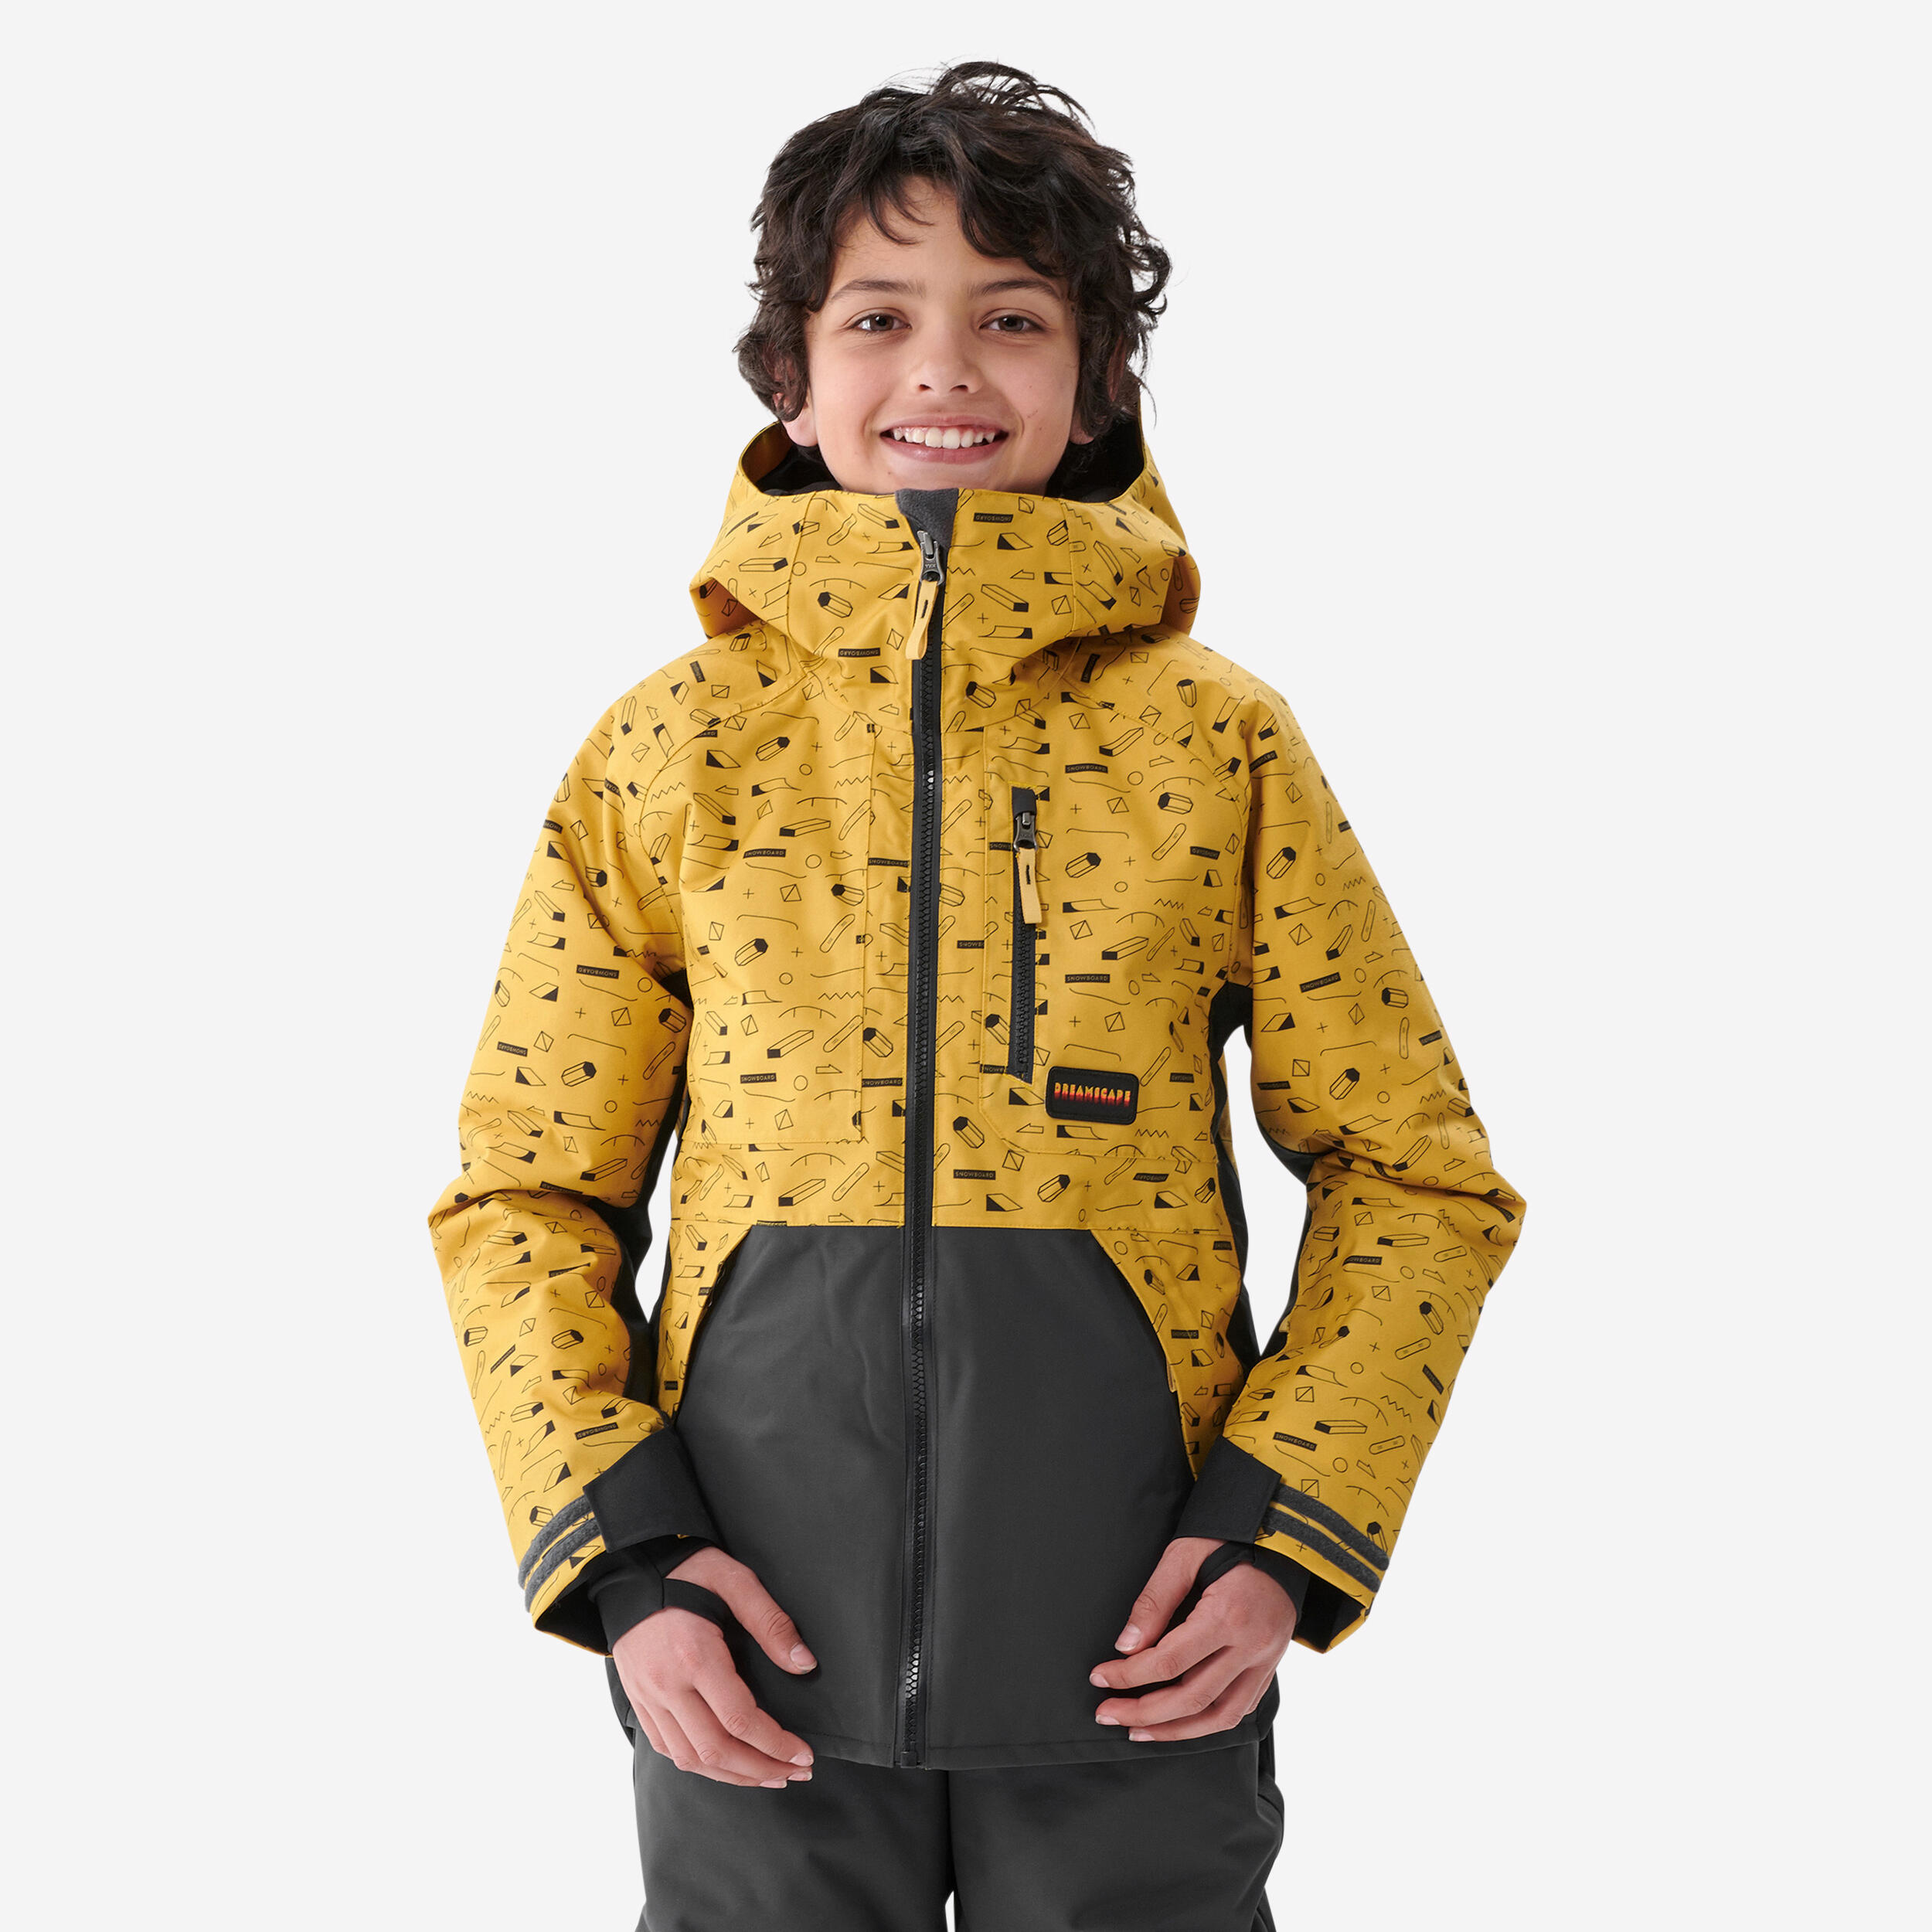 Kids' Snowboard Jacket - SNB 500 Yellow - Ochre, Carbon grey 